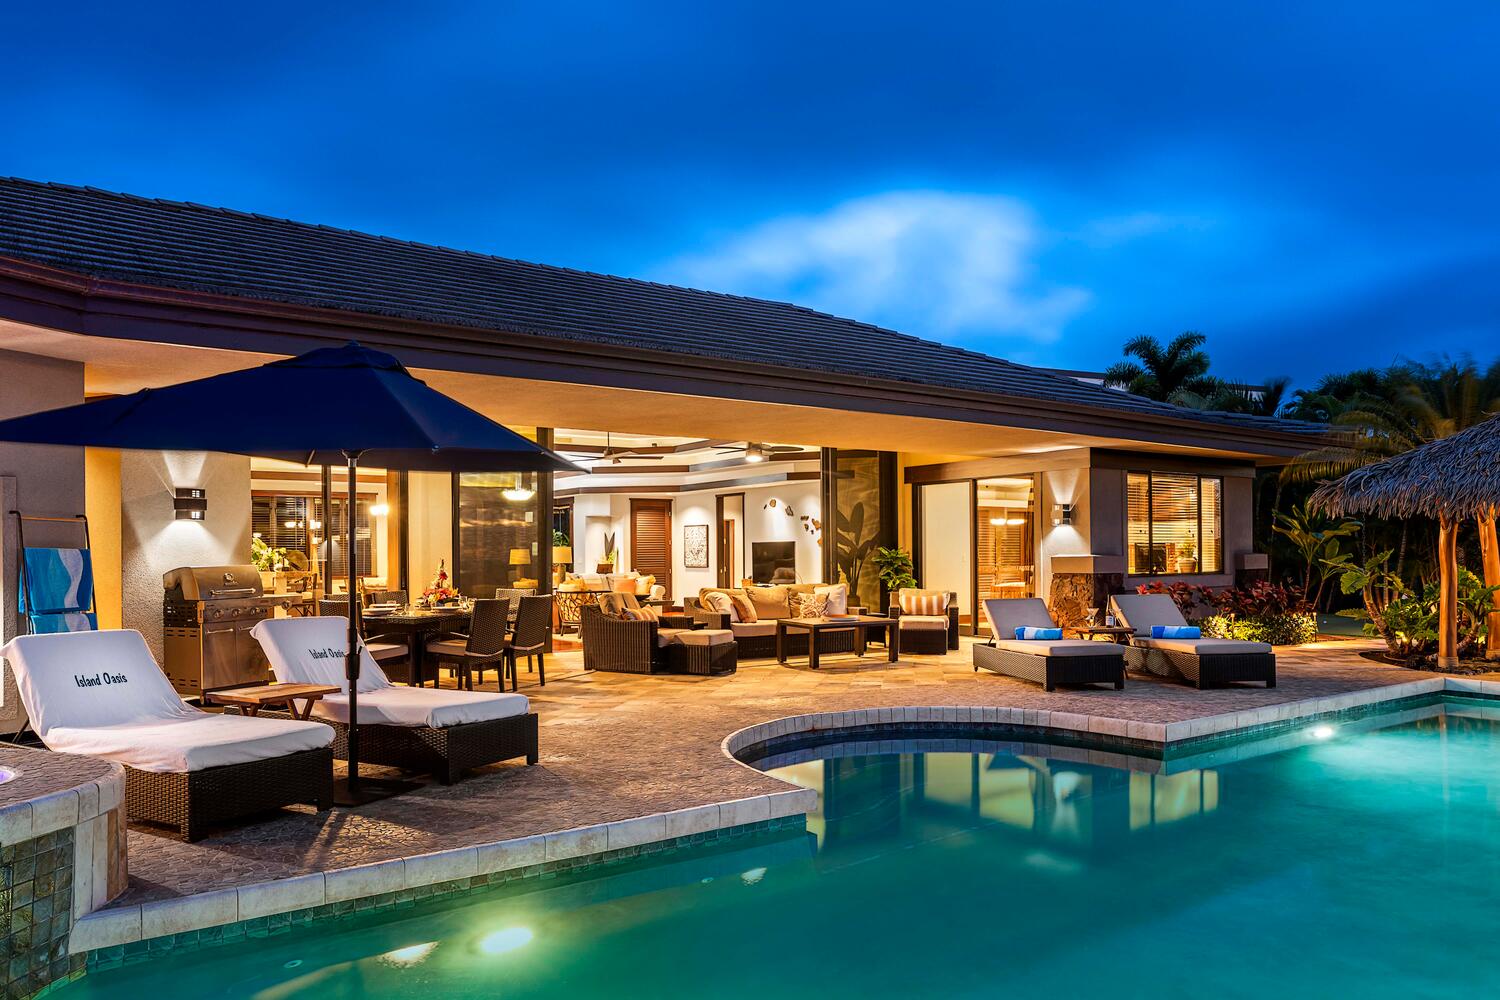 Kailua Kona Vacation Rentals, Island Oasis - Twilight at the Island Oasis